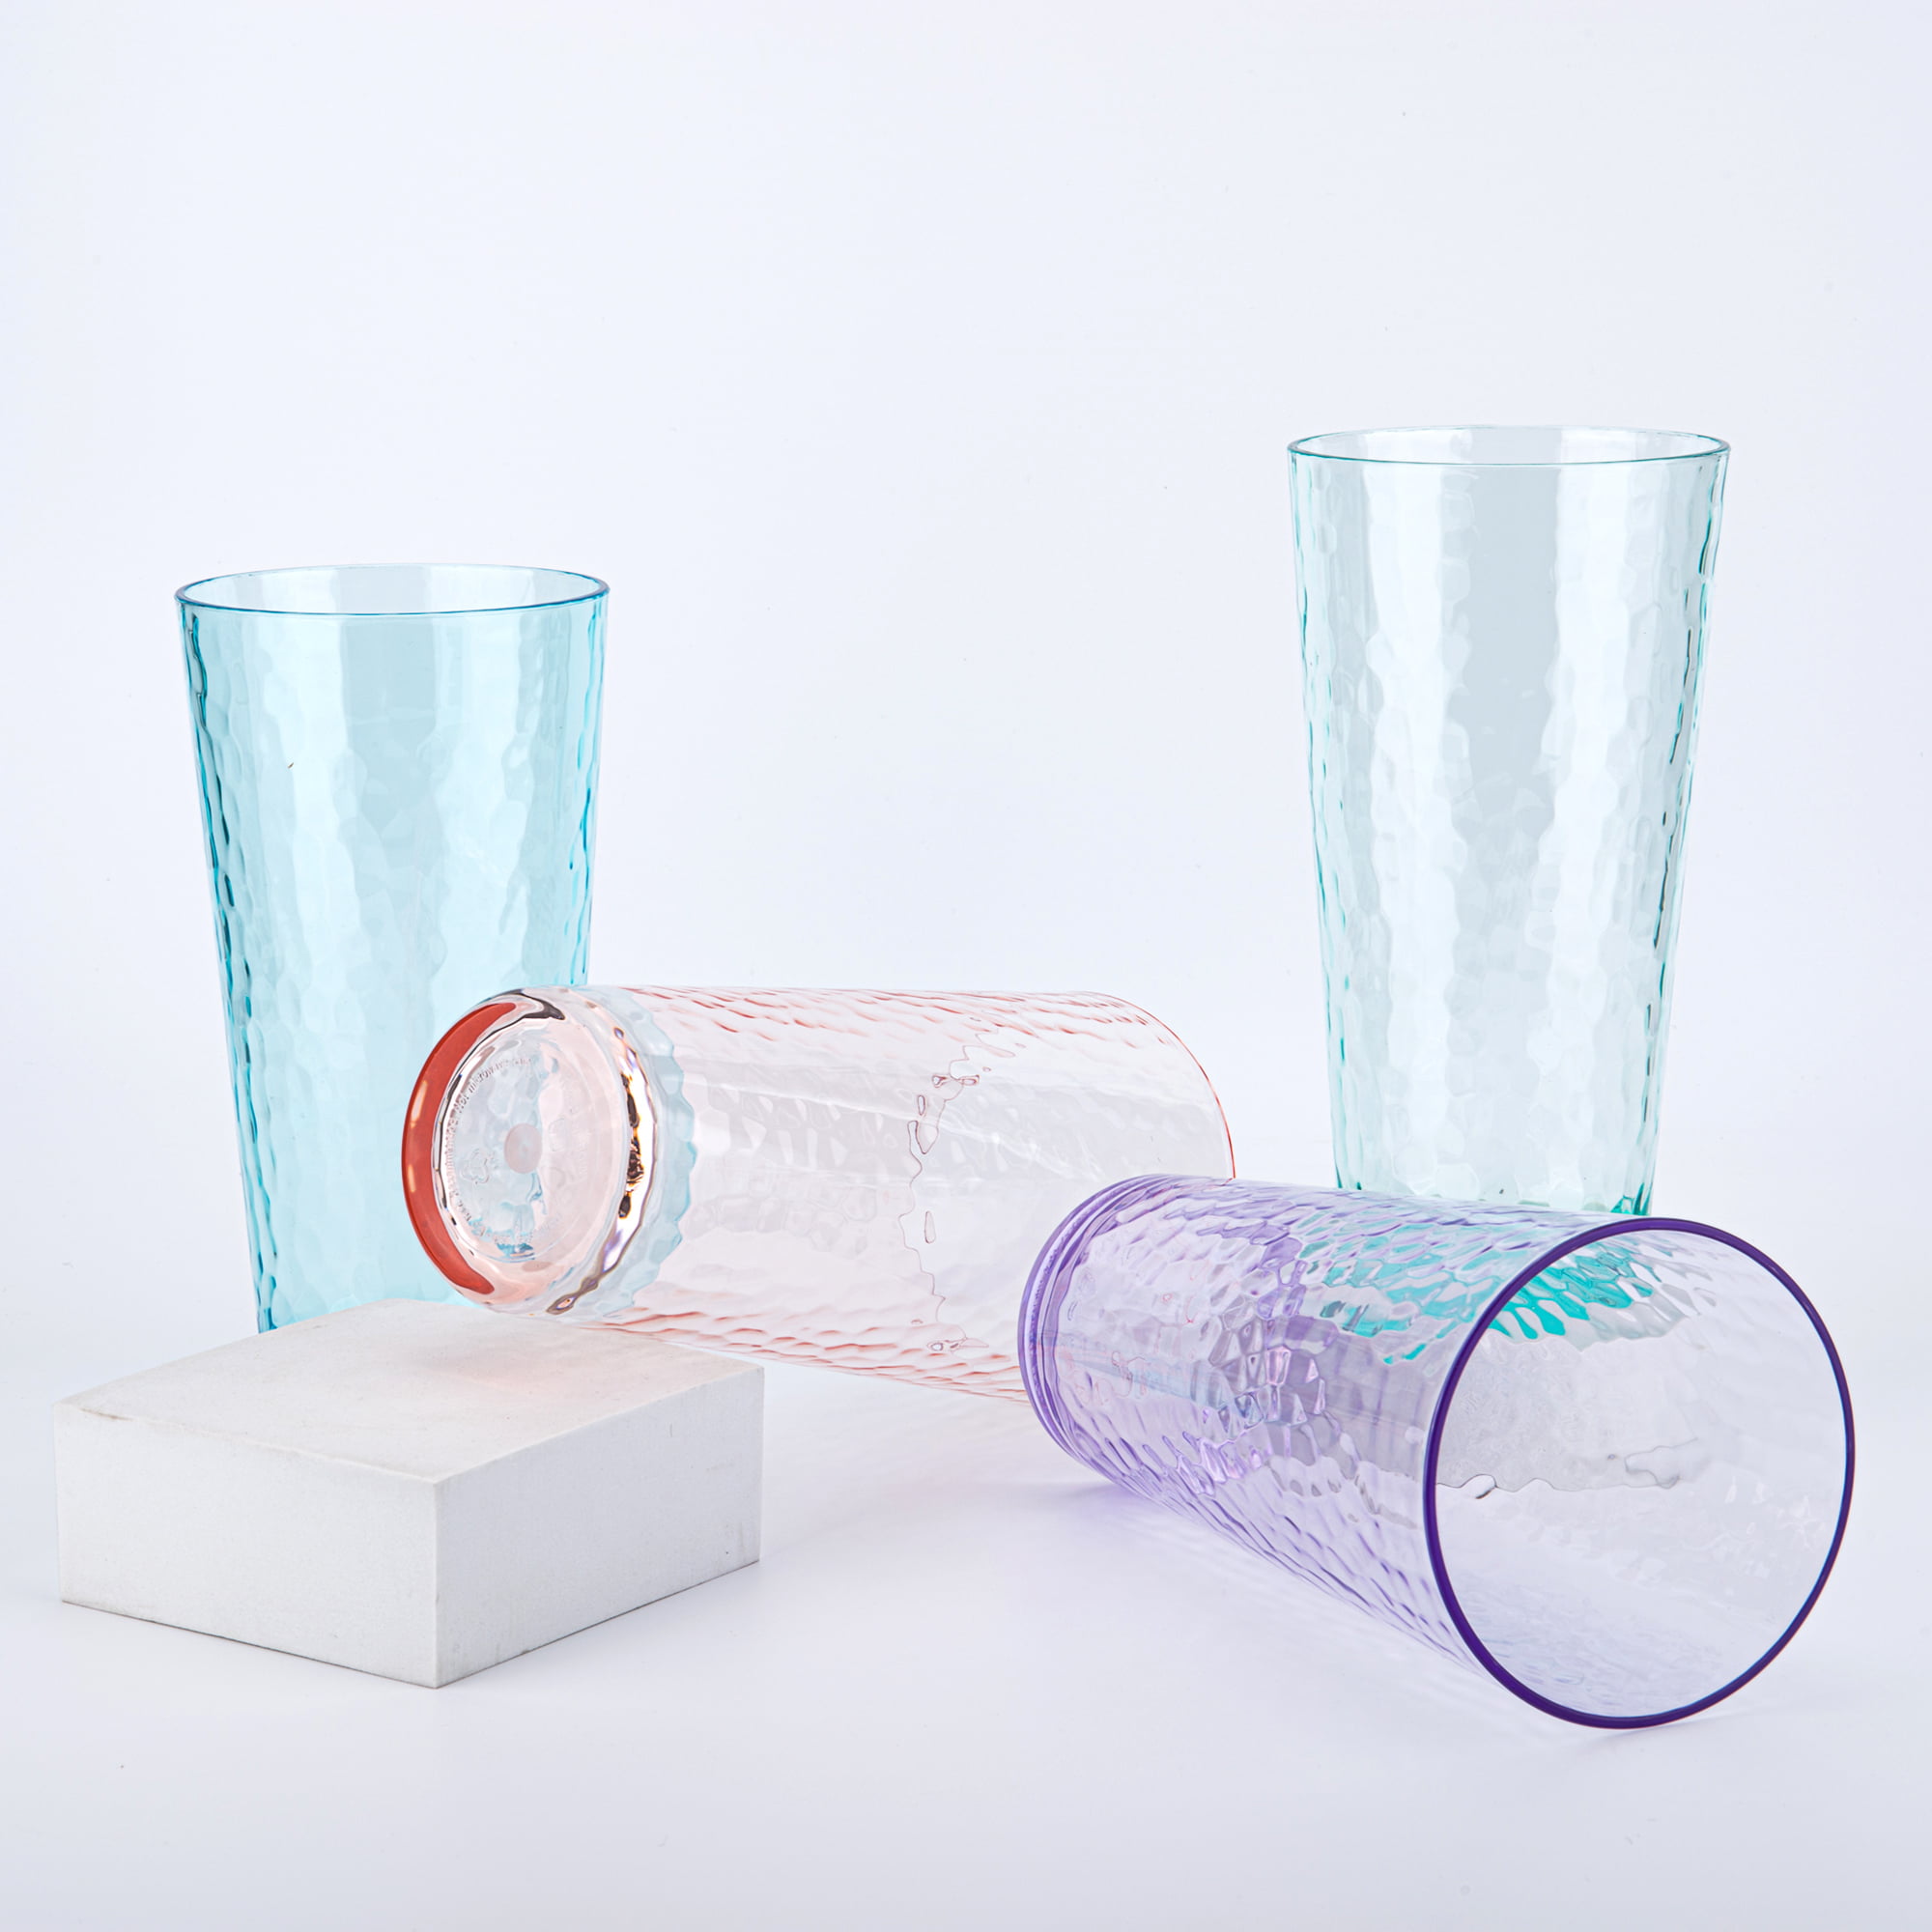 US Acrylic Classic Clear Plastic Reusable Drinking Glasses (Set of 6) 12oz  Rocks Cups | BPA-Free Tum…See more US Acrylic Classic Clear Plastic